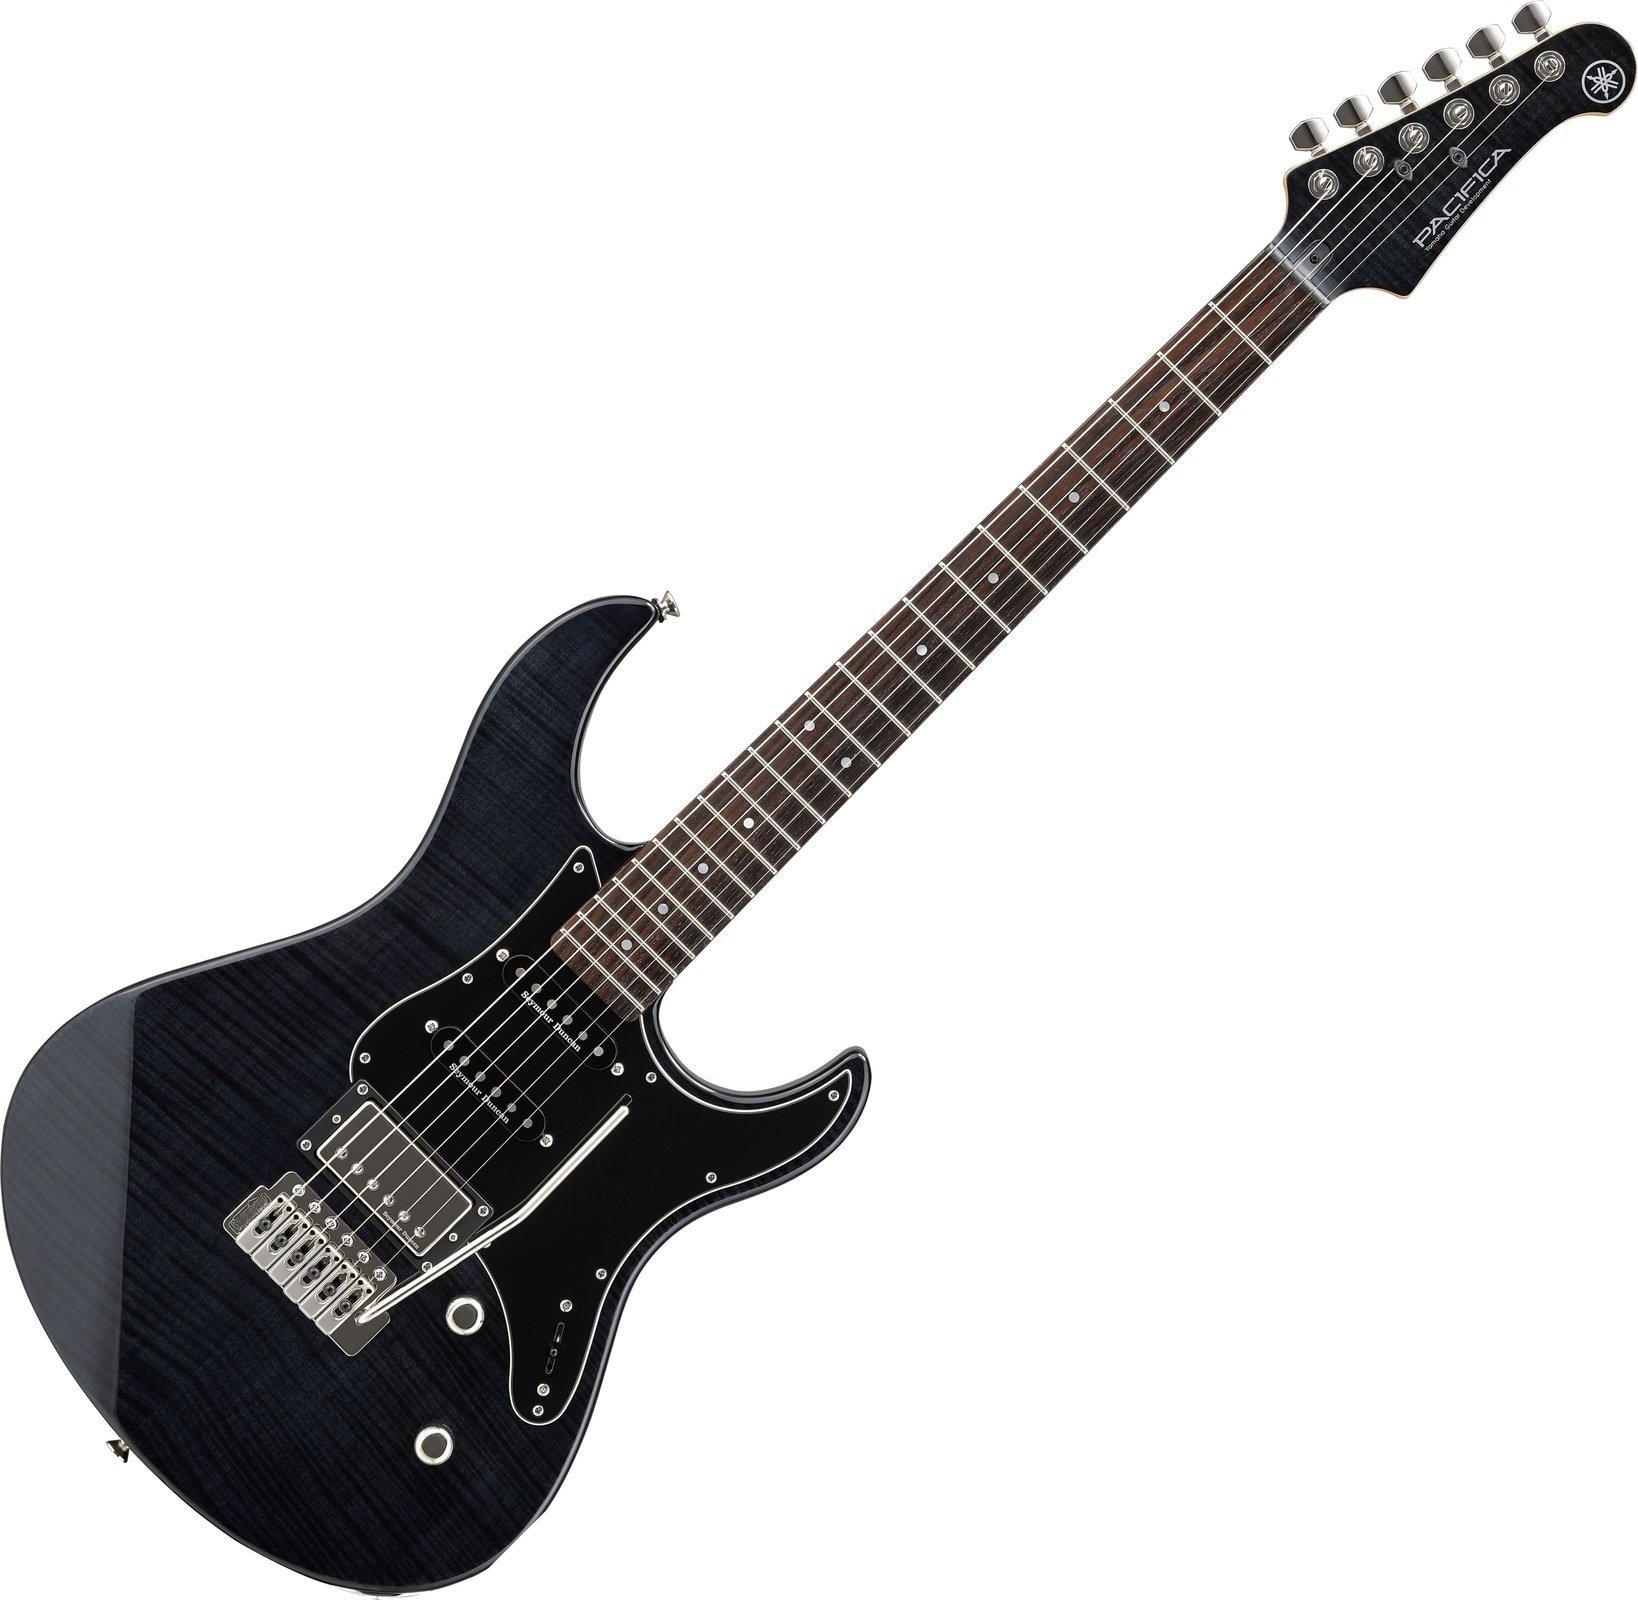 Electric guitar Yamaha Pacifica 612V Translucent Black